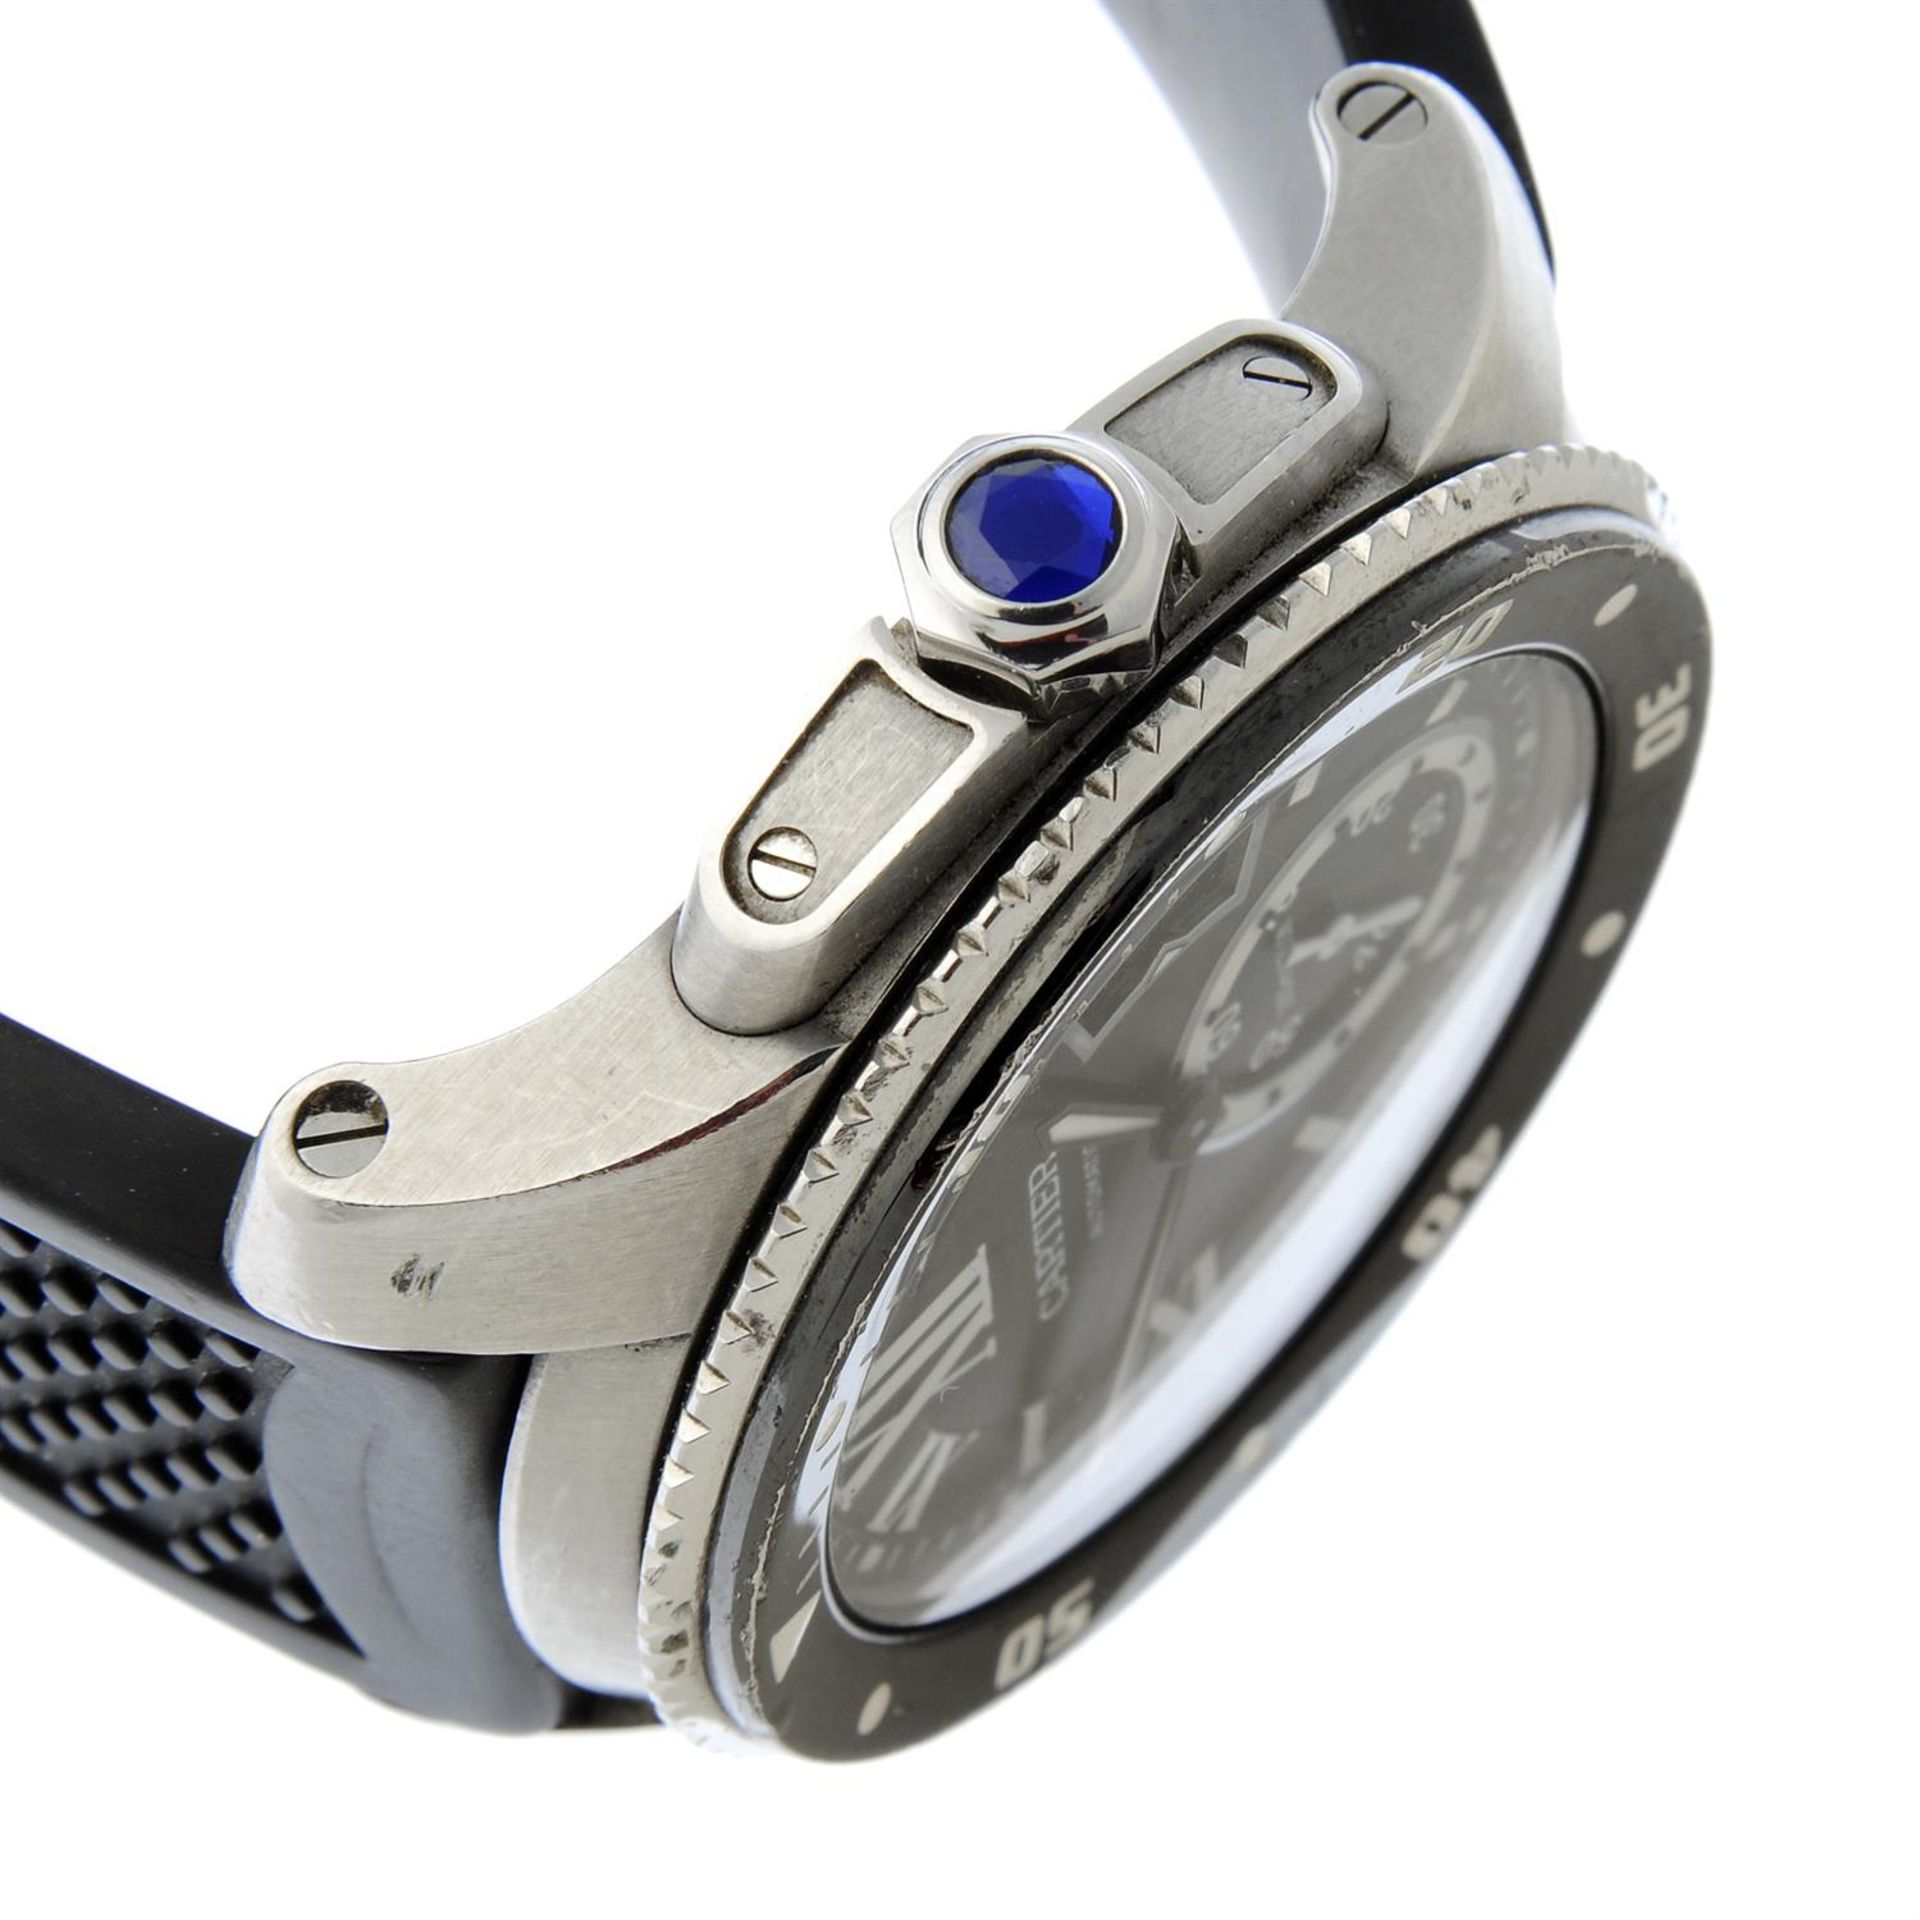 CARTIER - a stainless steel Calibre de Cartier Diver wrist watch, 43mm. - Image 3 of 5